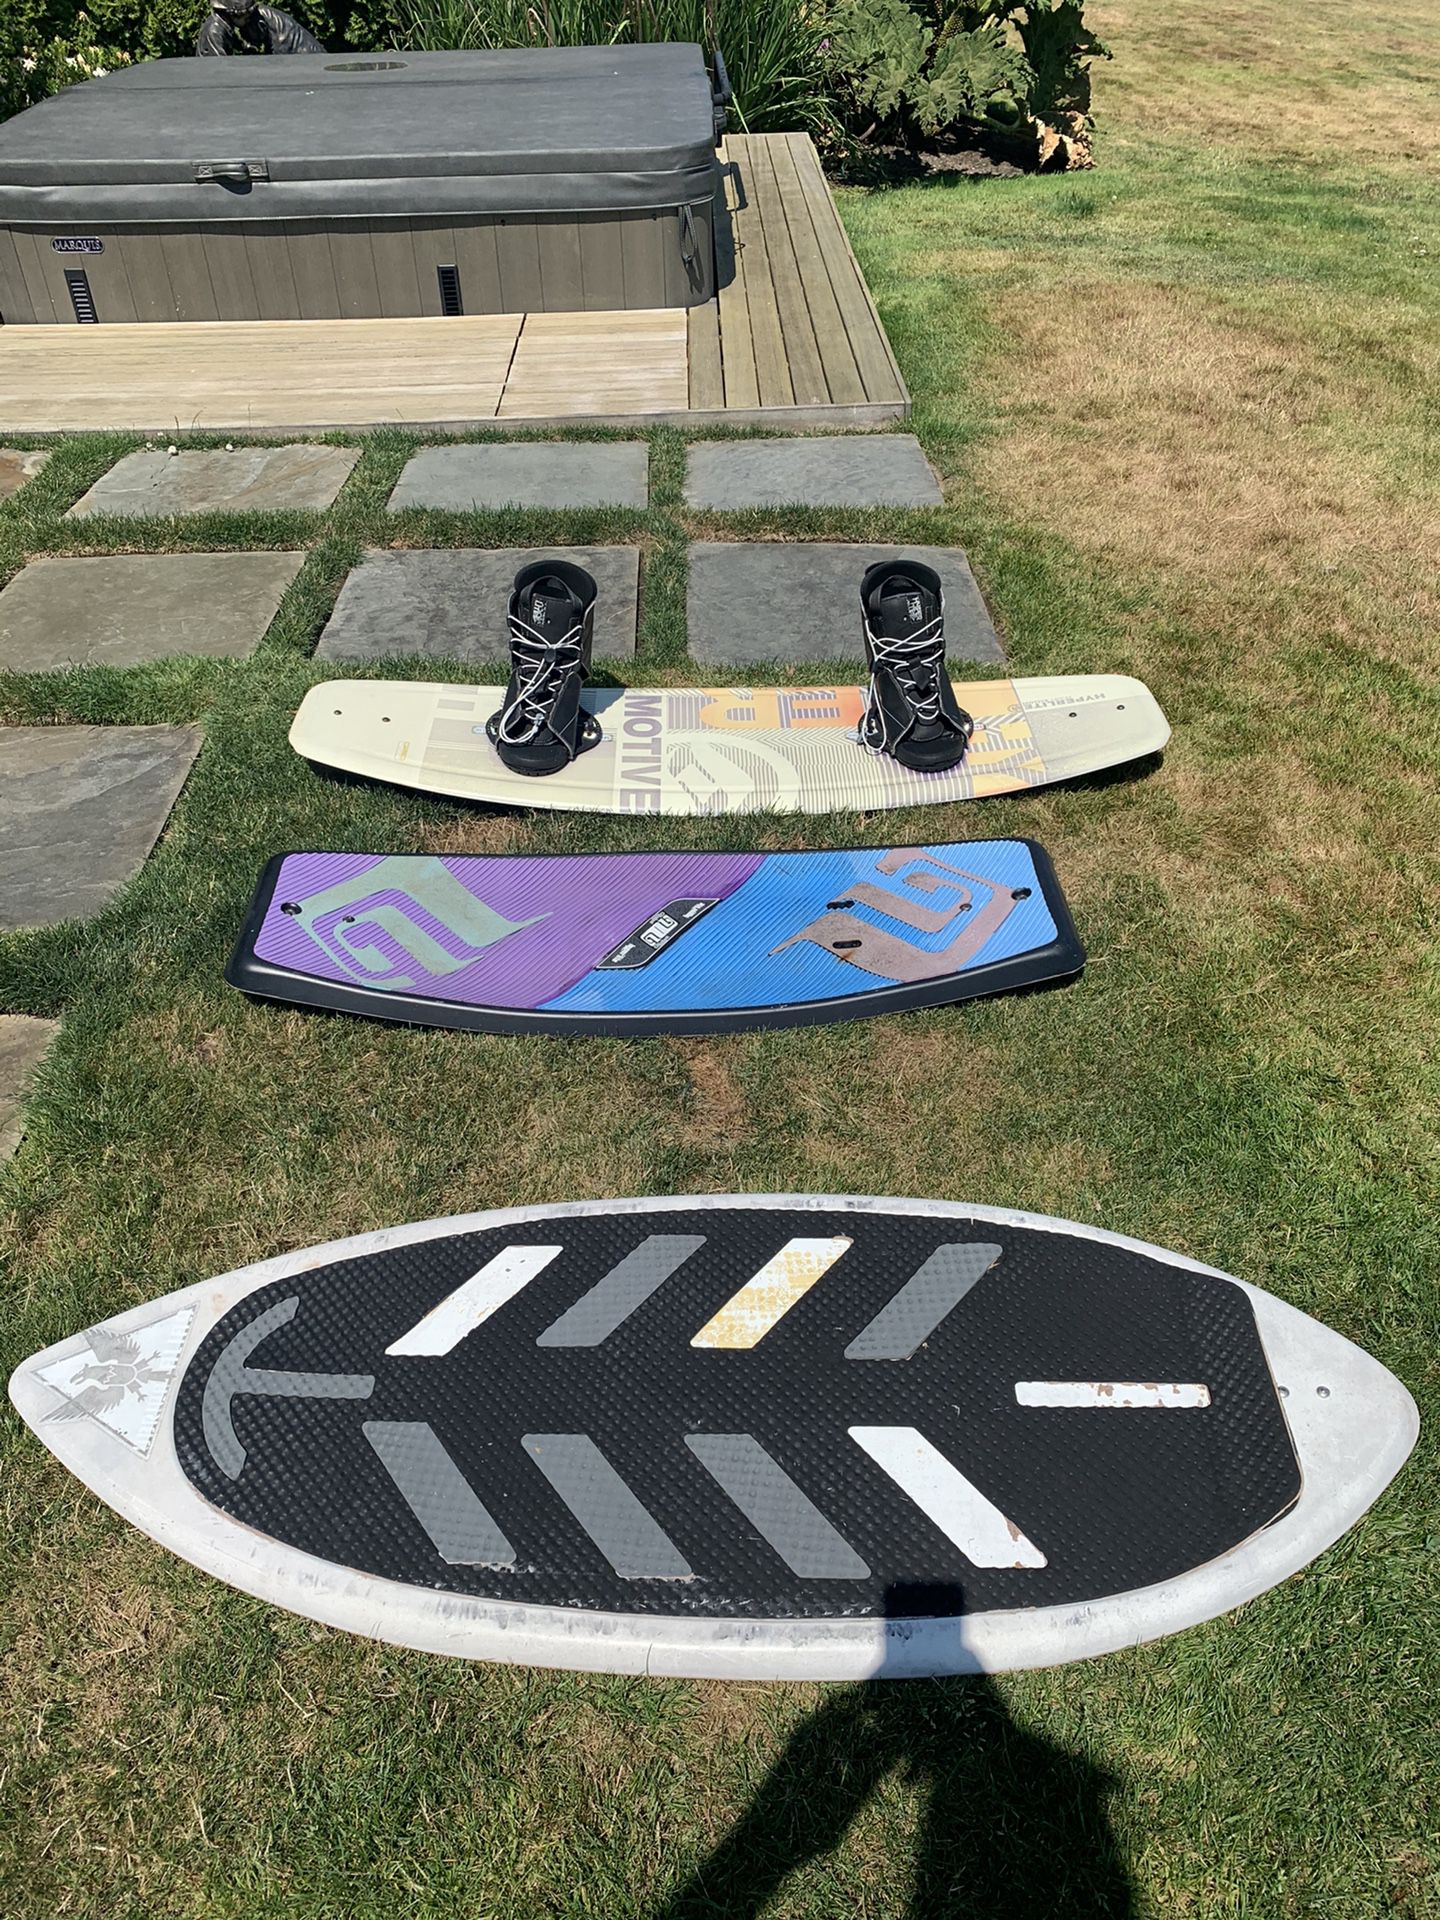 Wake surfboard, wake skate and wakeboard